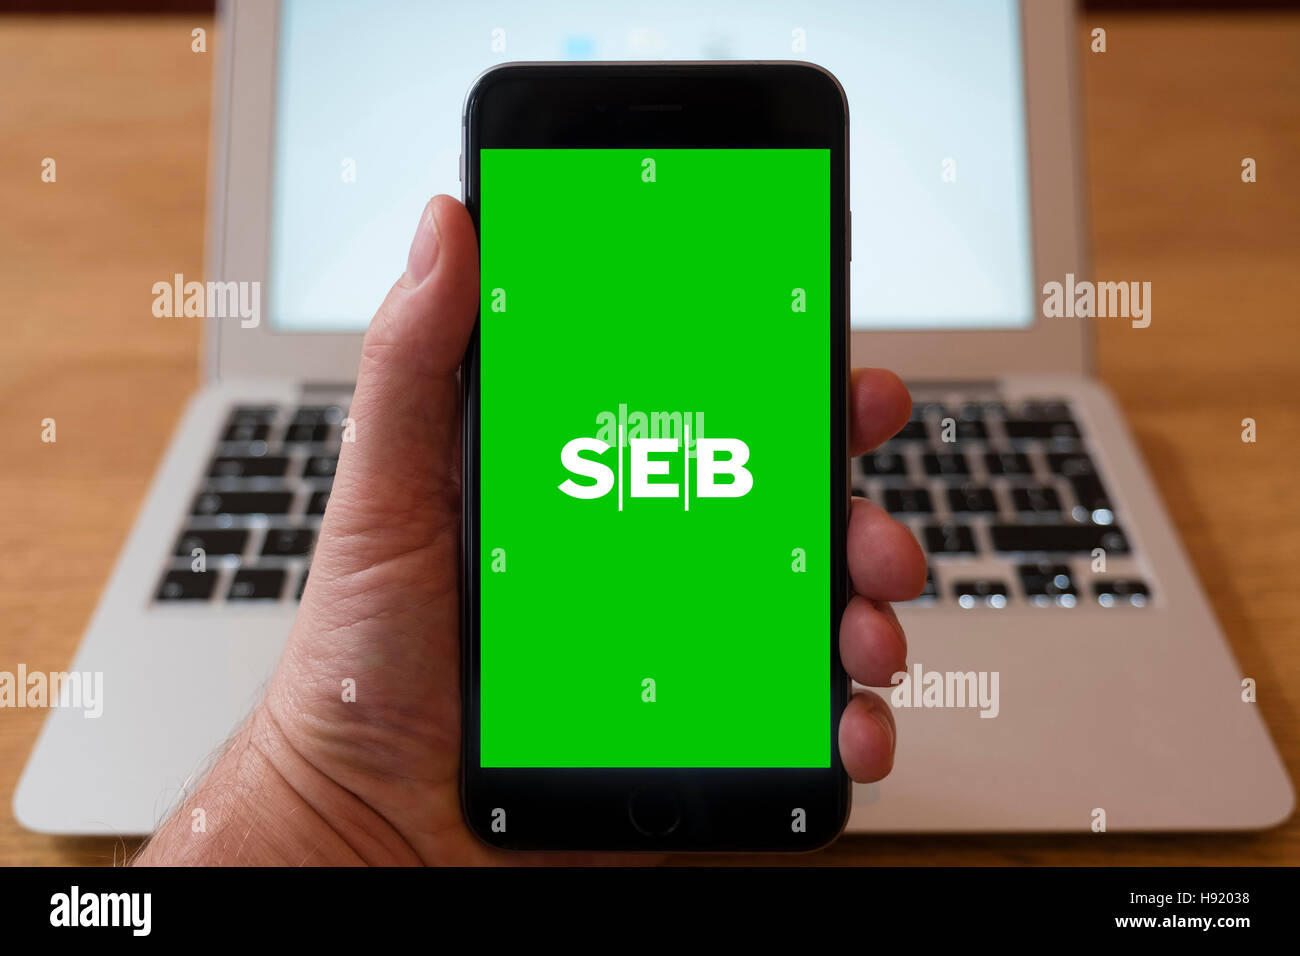 Using iPhone smart phone to display website logo of SEB, Skandinaviska Enskilda Banken, Swedish financial group. Stock Photo